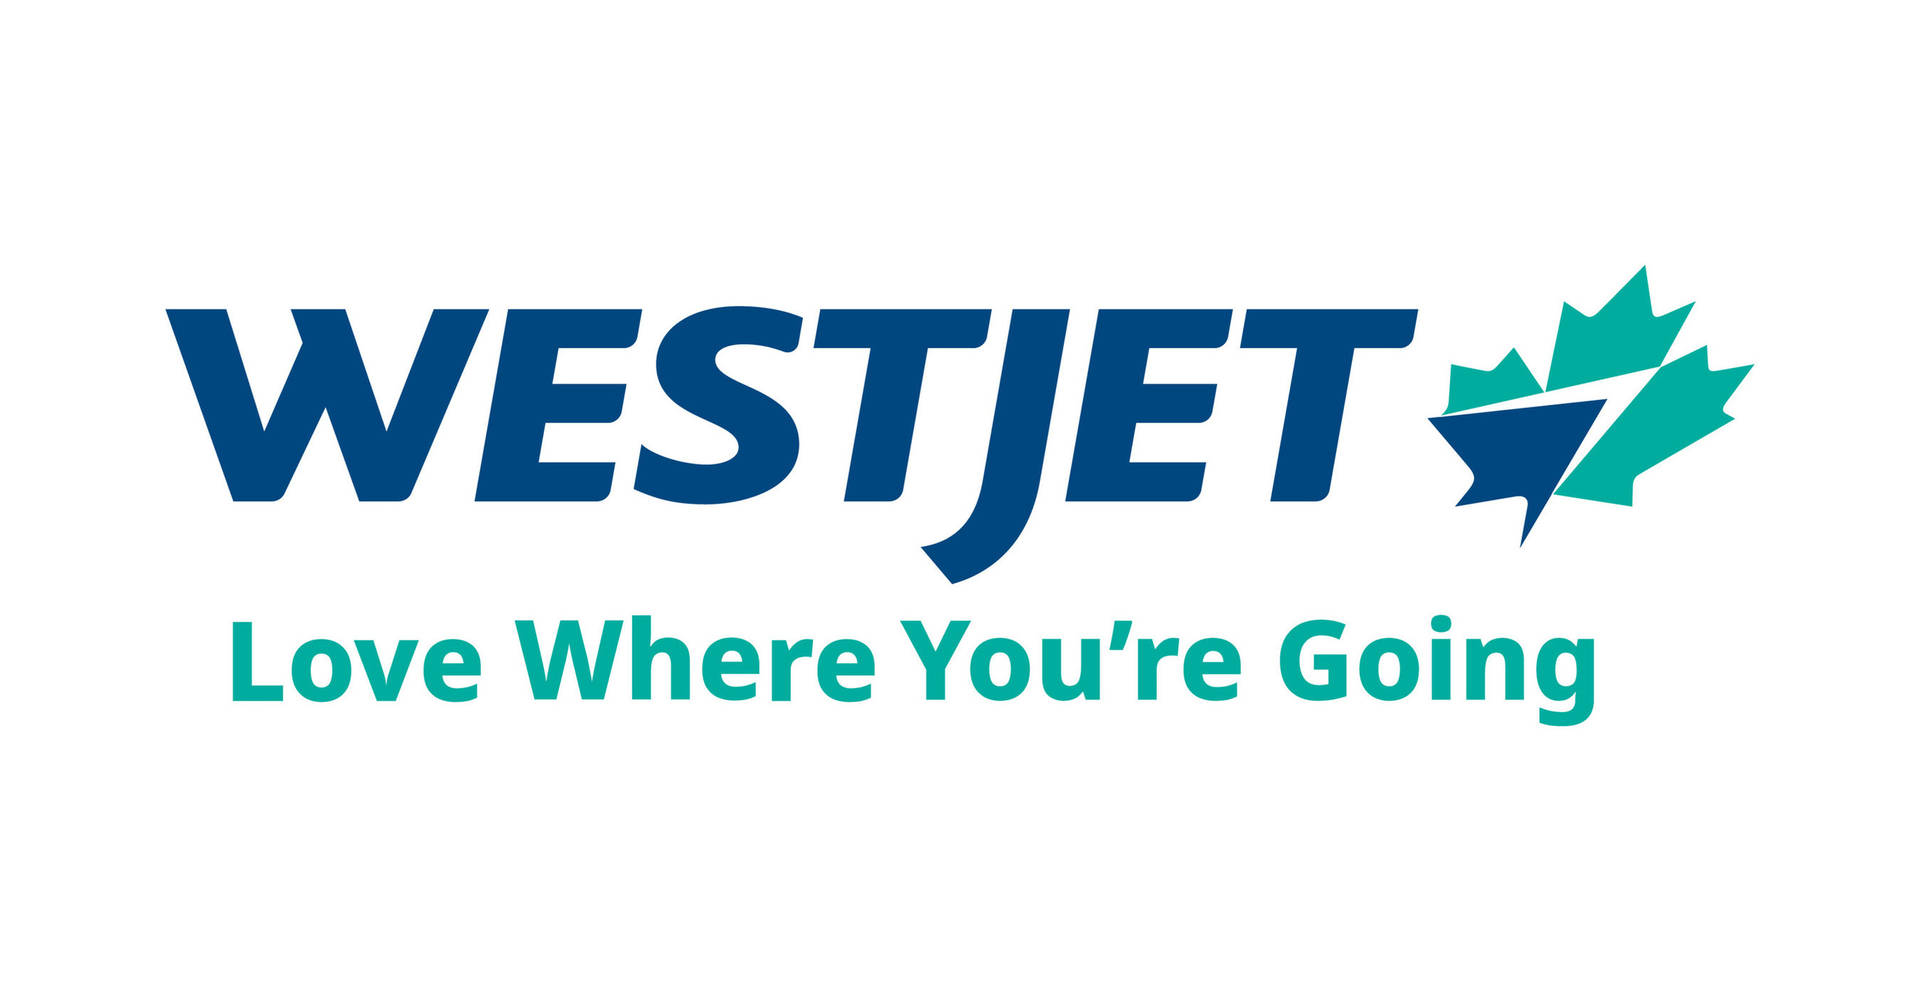 WestJet Airlinens slogan: 